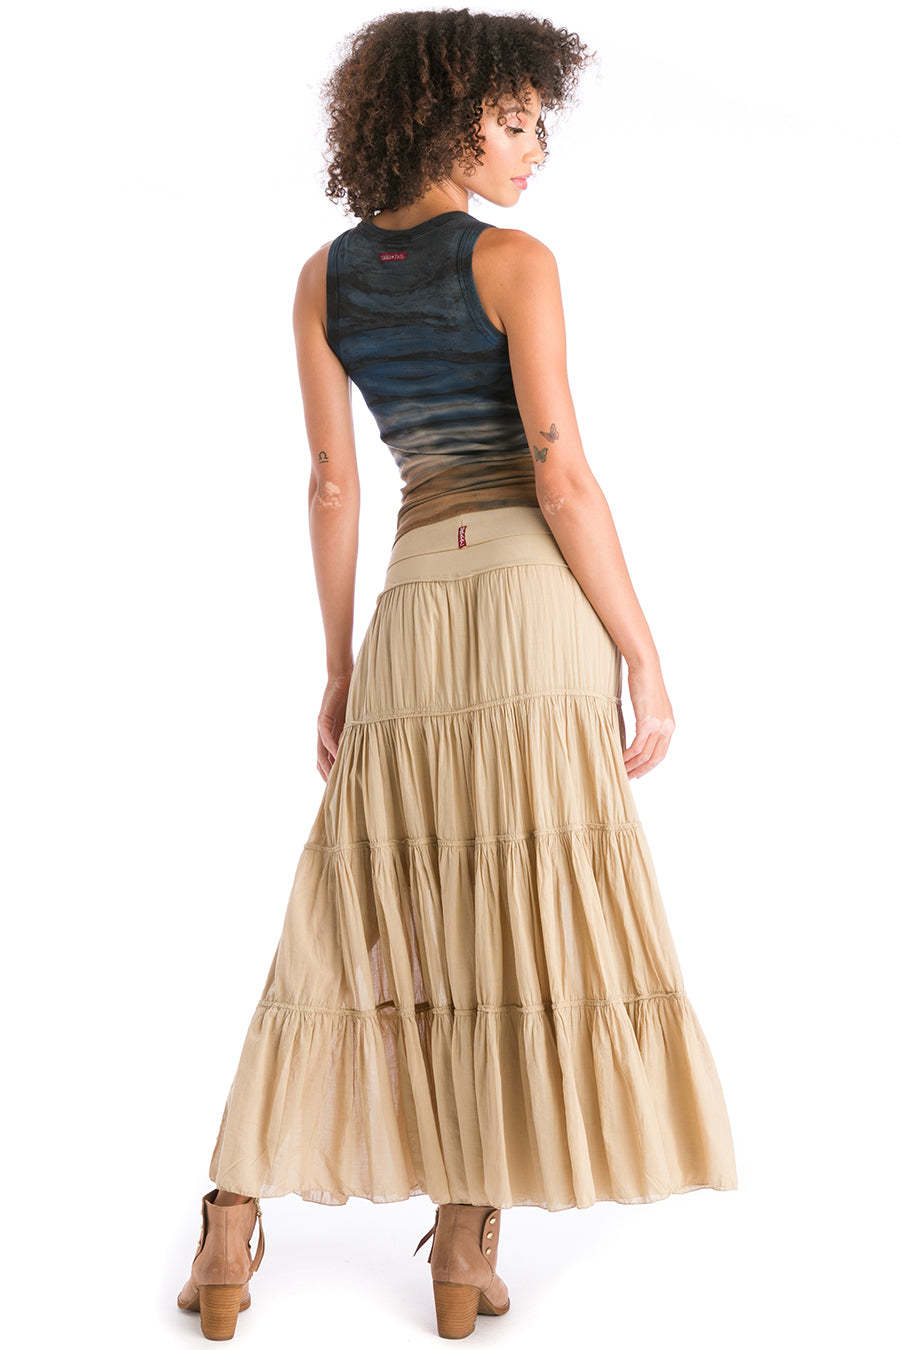 Hardtail Rolldown Tiered Skirt